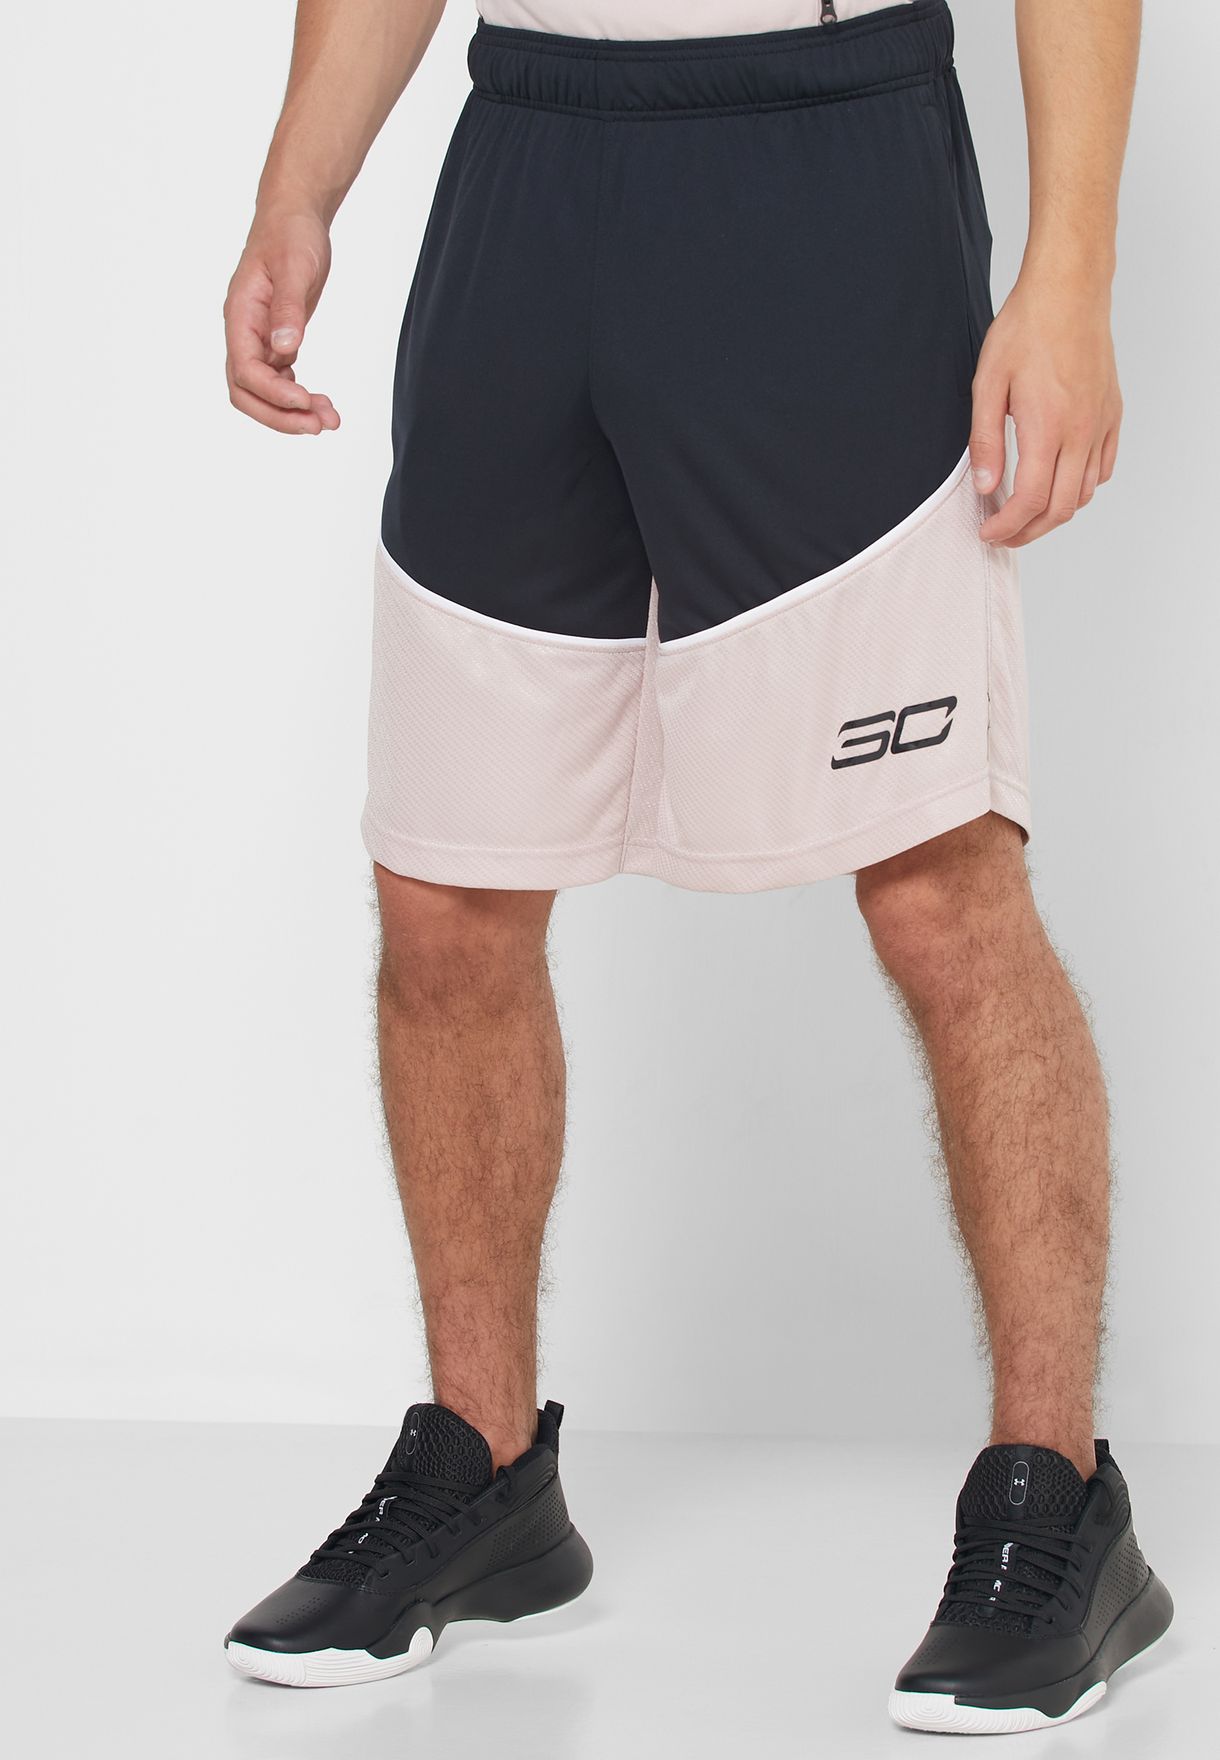 sc30 shorts